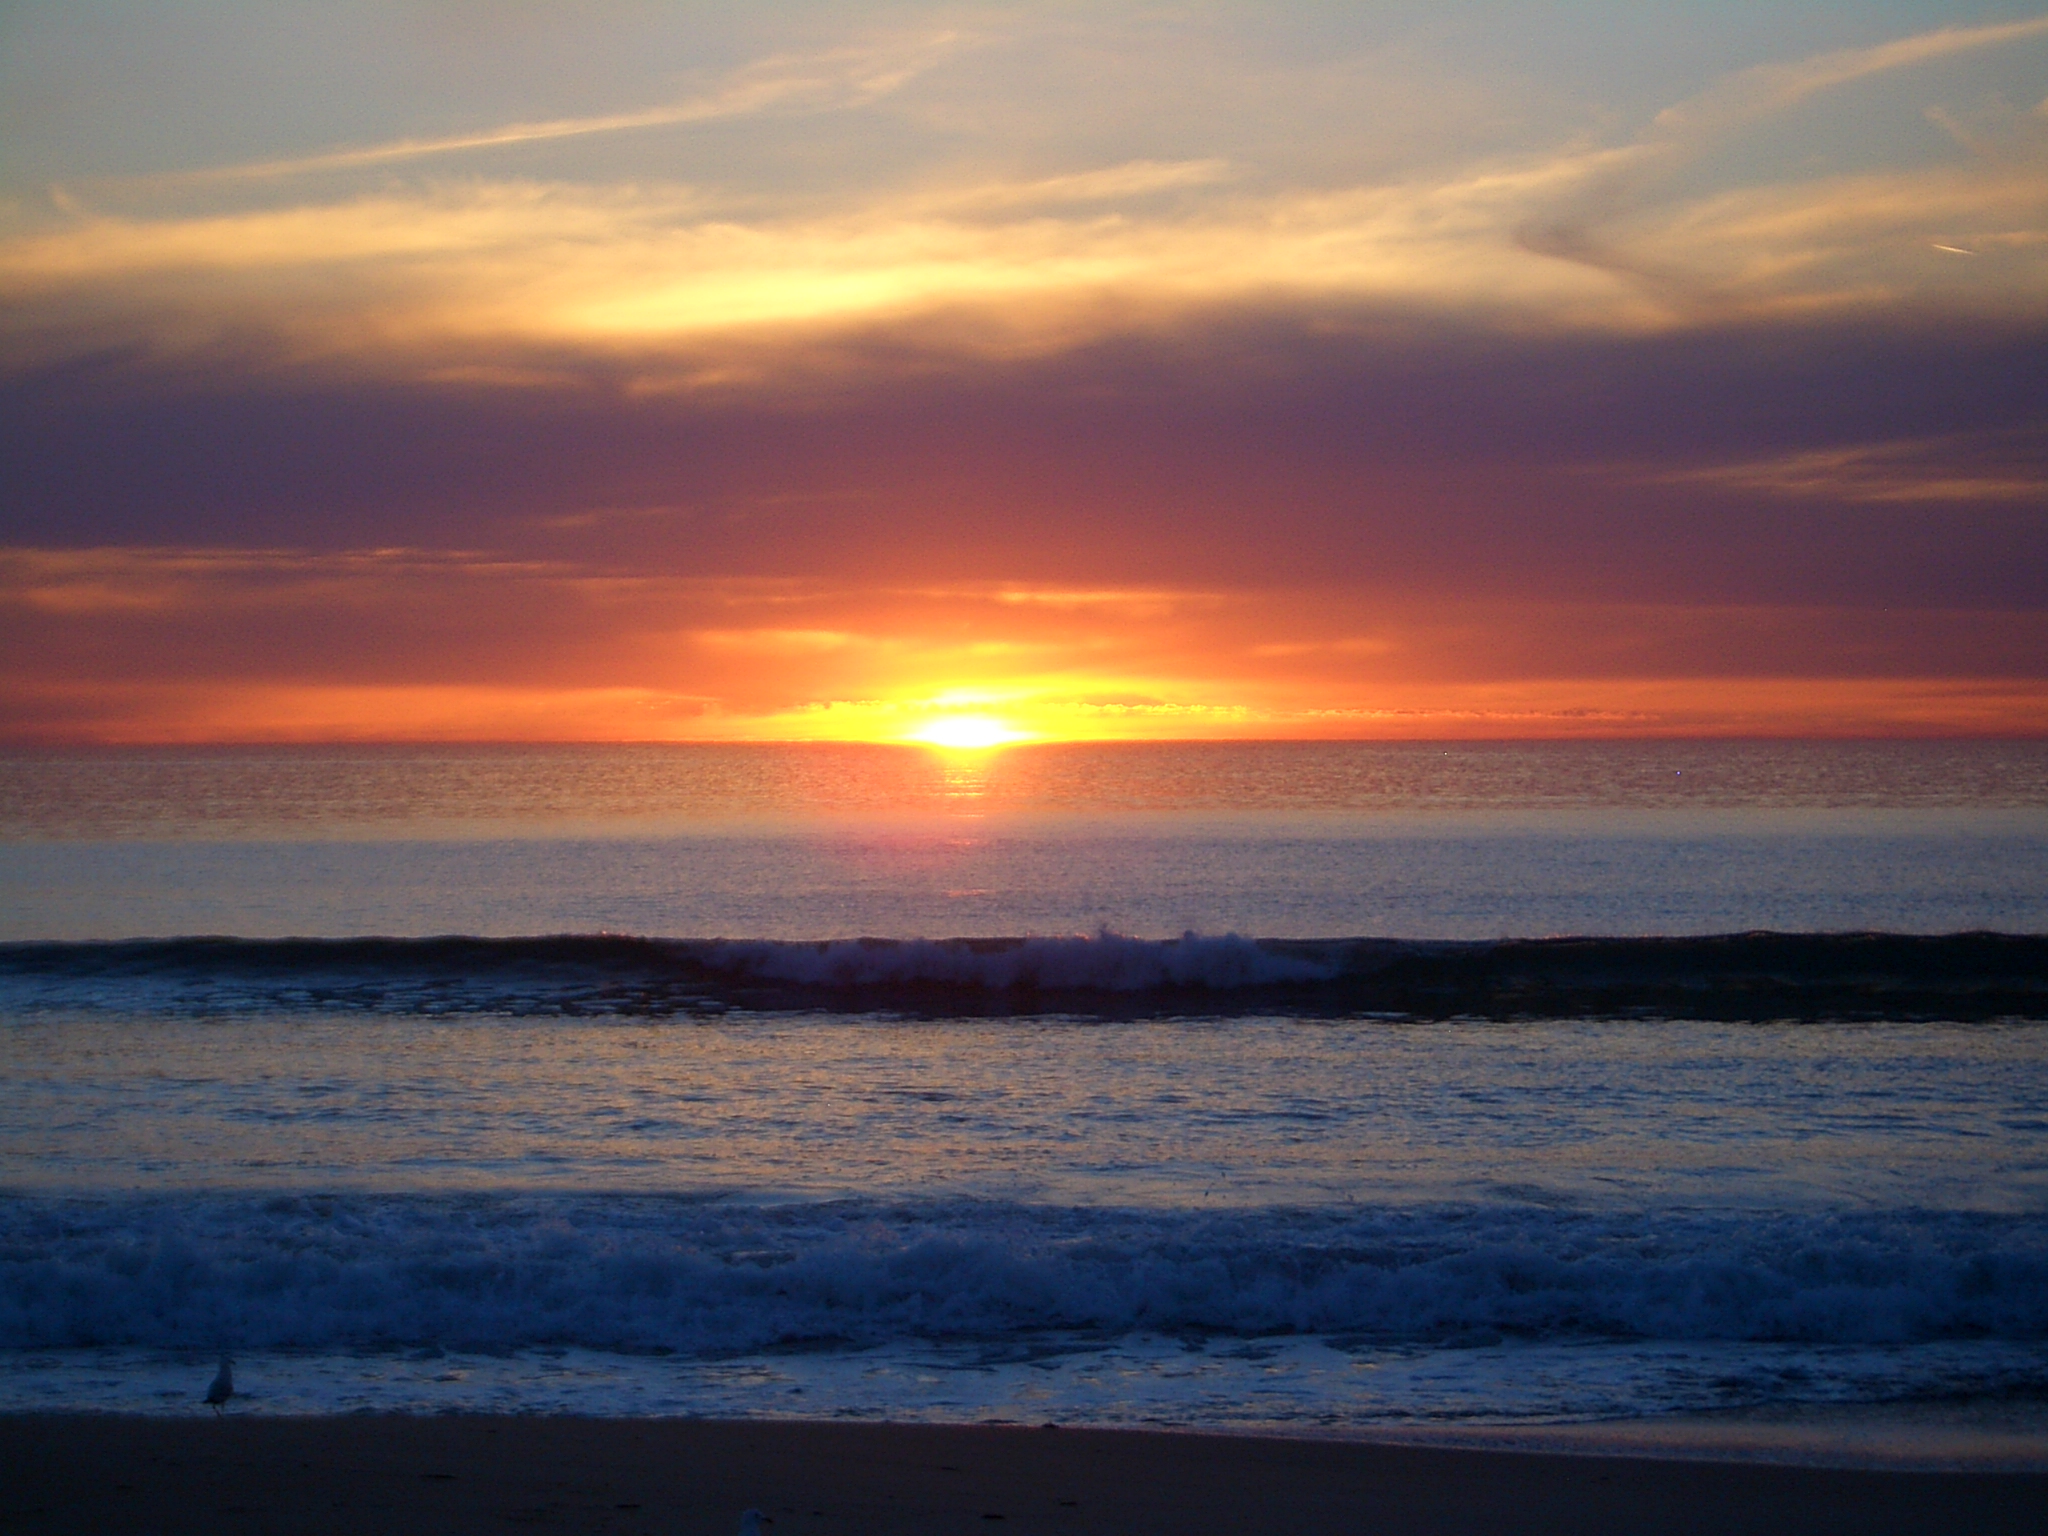 File:Maslin-Beach-sunset-1362.jpg - Wikimedia Commons